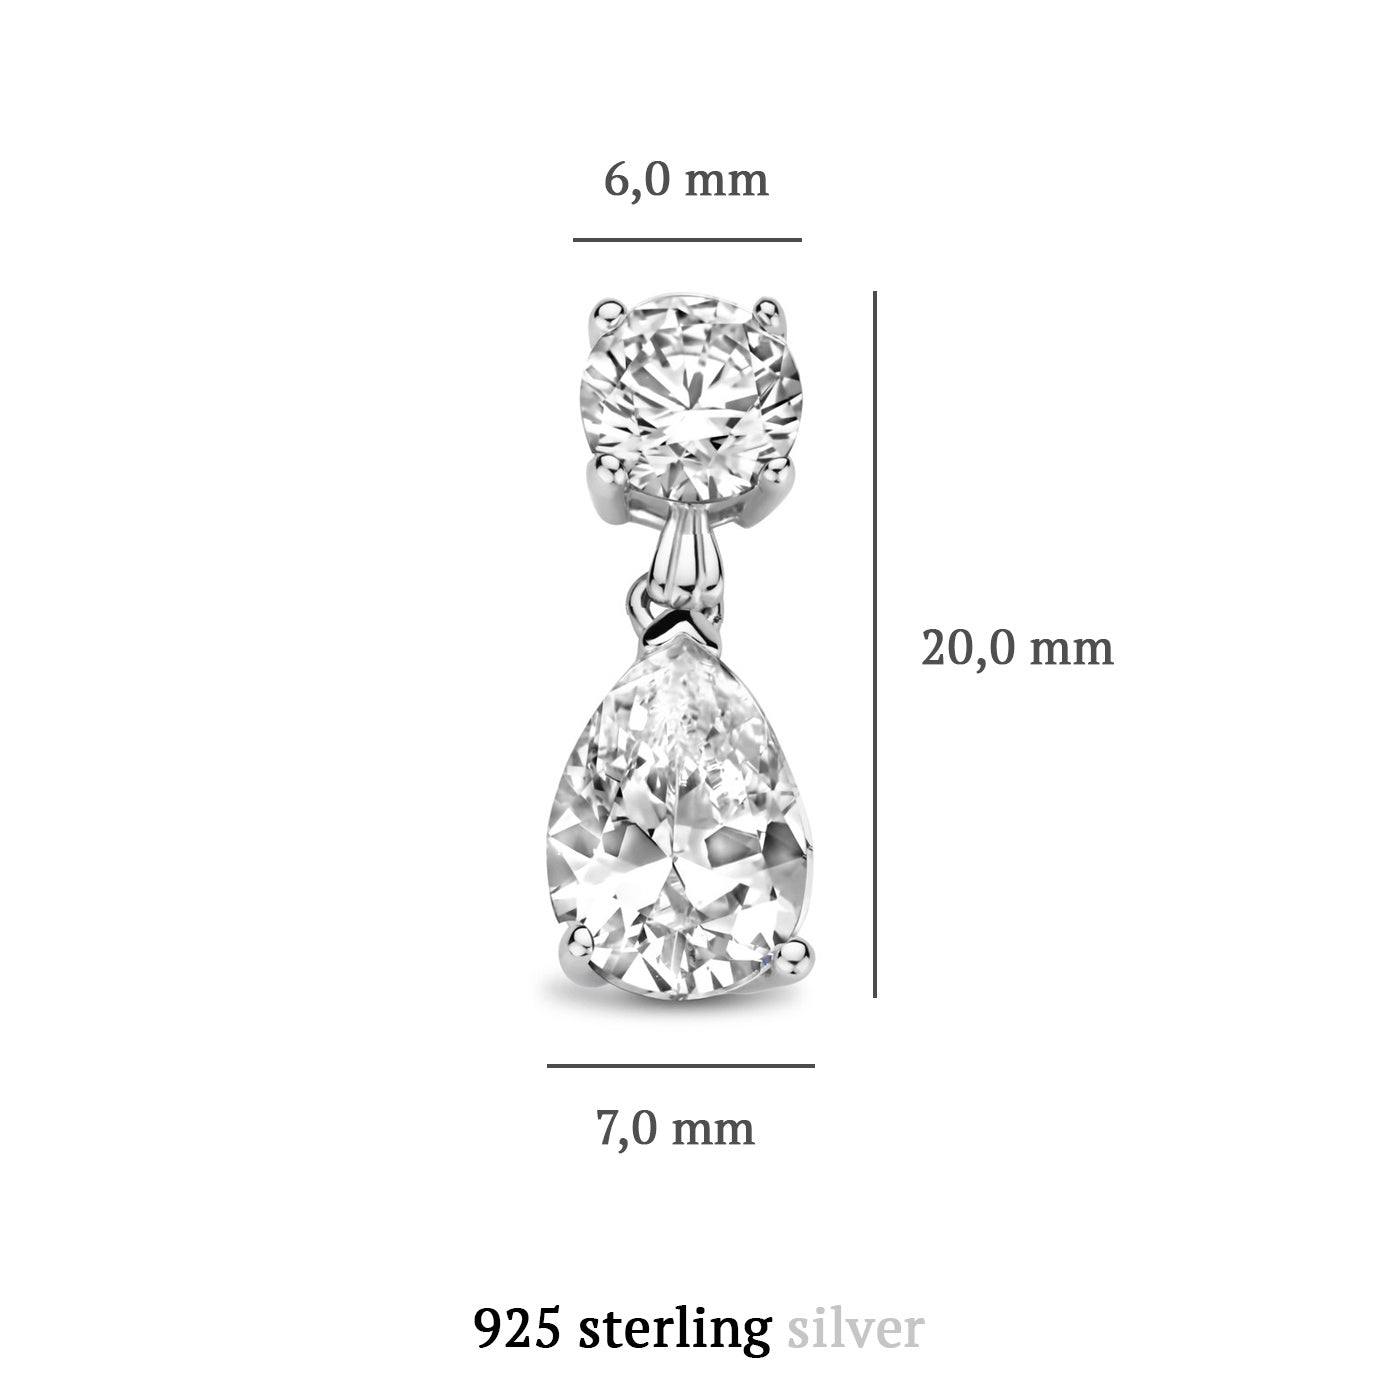 Ponte Vecchio Sienna 925 sterling sølv ørering med zirconia sten